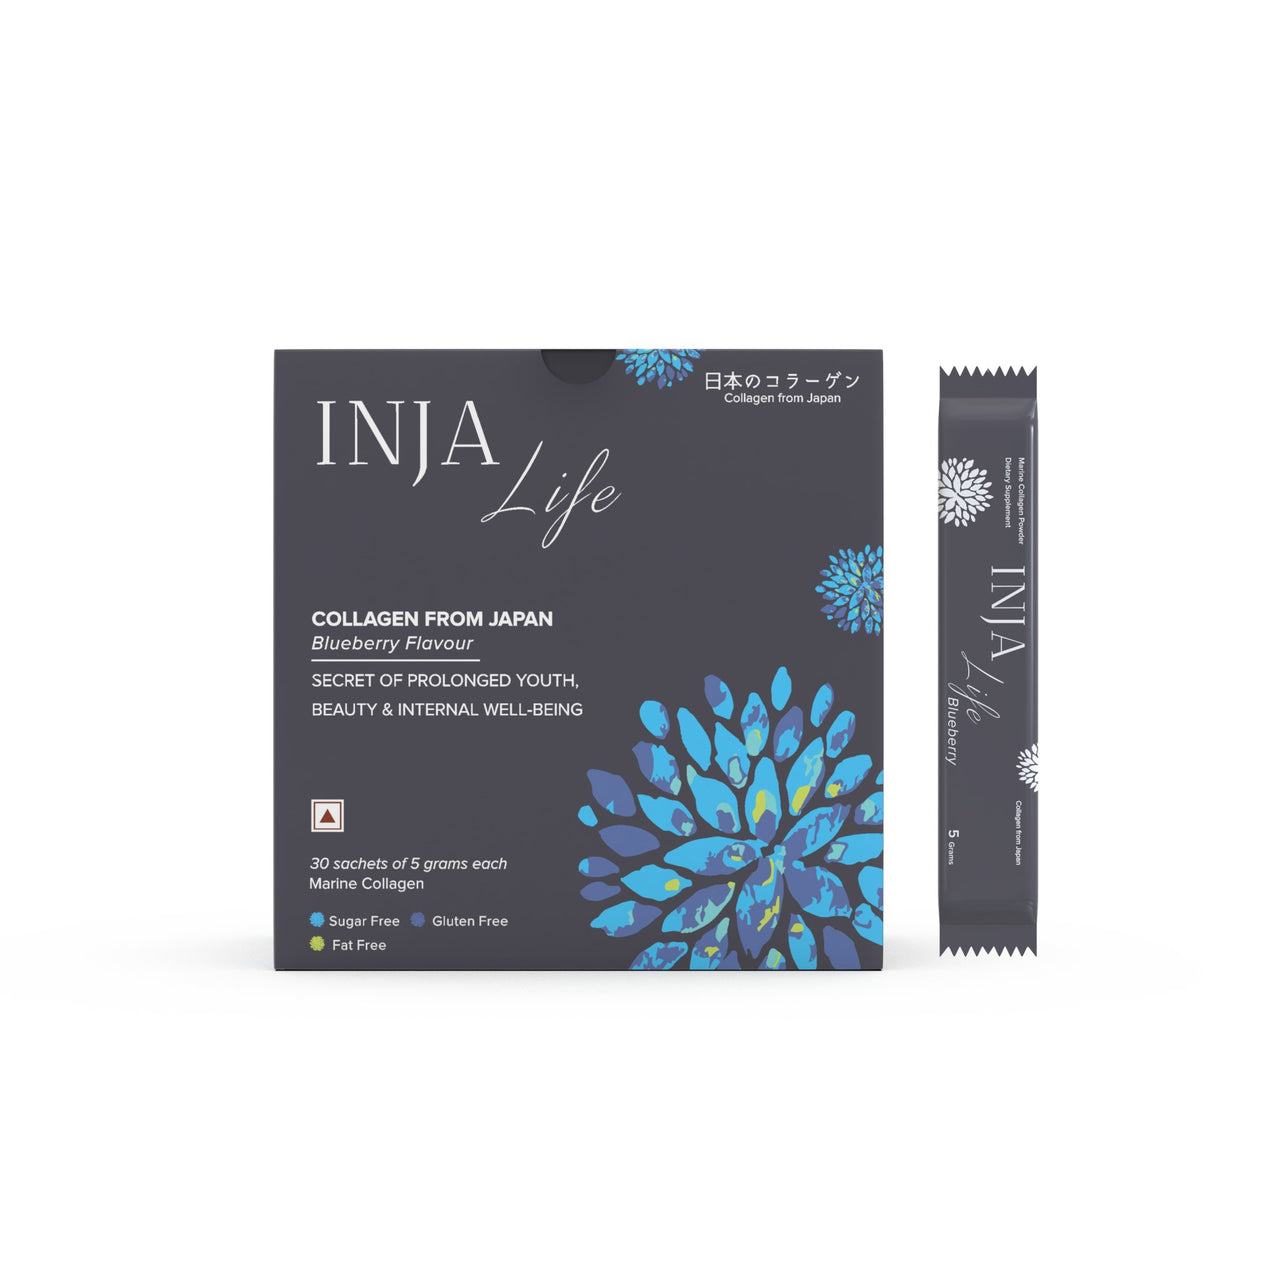 INJA Life Japanese Collagen, 30 sachets with Vit C, Glutathione, Glucosamine & more - Blueberry Flavour - CBD Store India